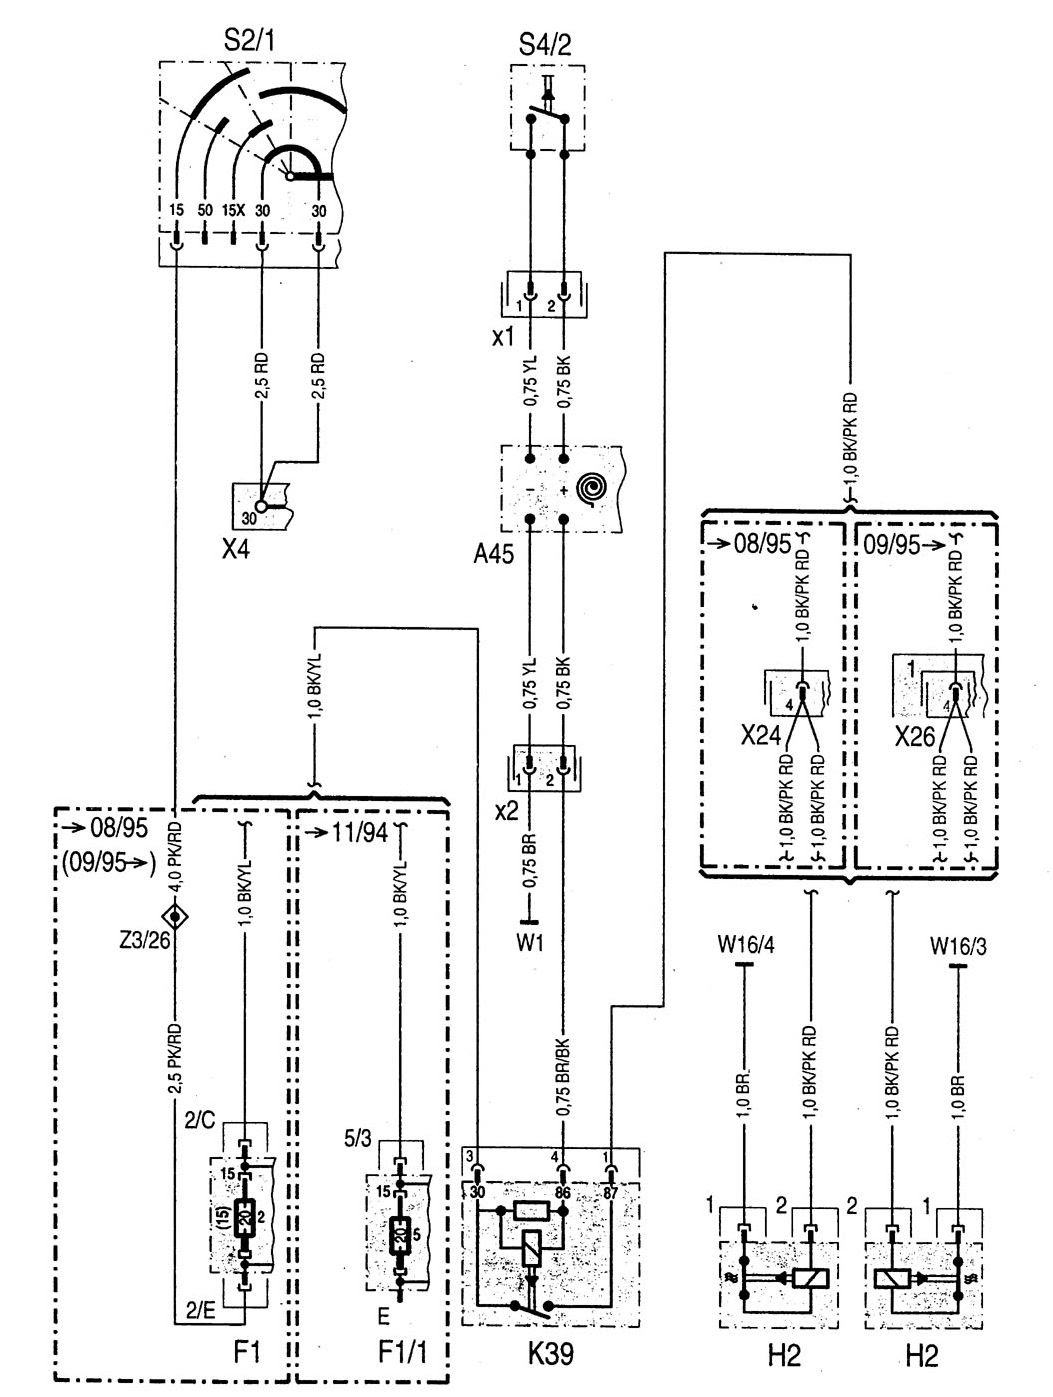 Mercede Benz Wiring Diagram - Wiring Diagrams